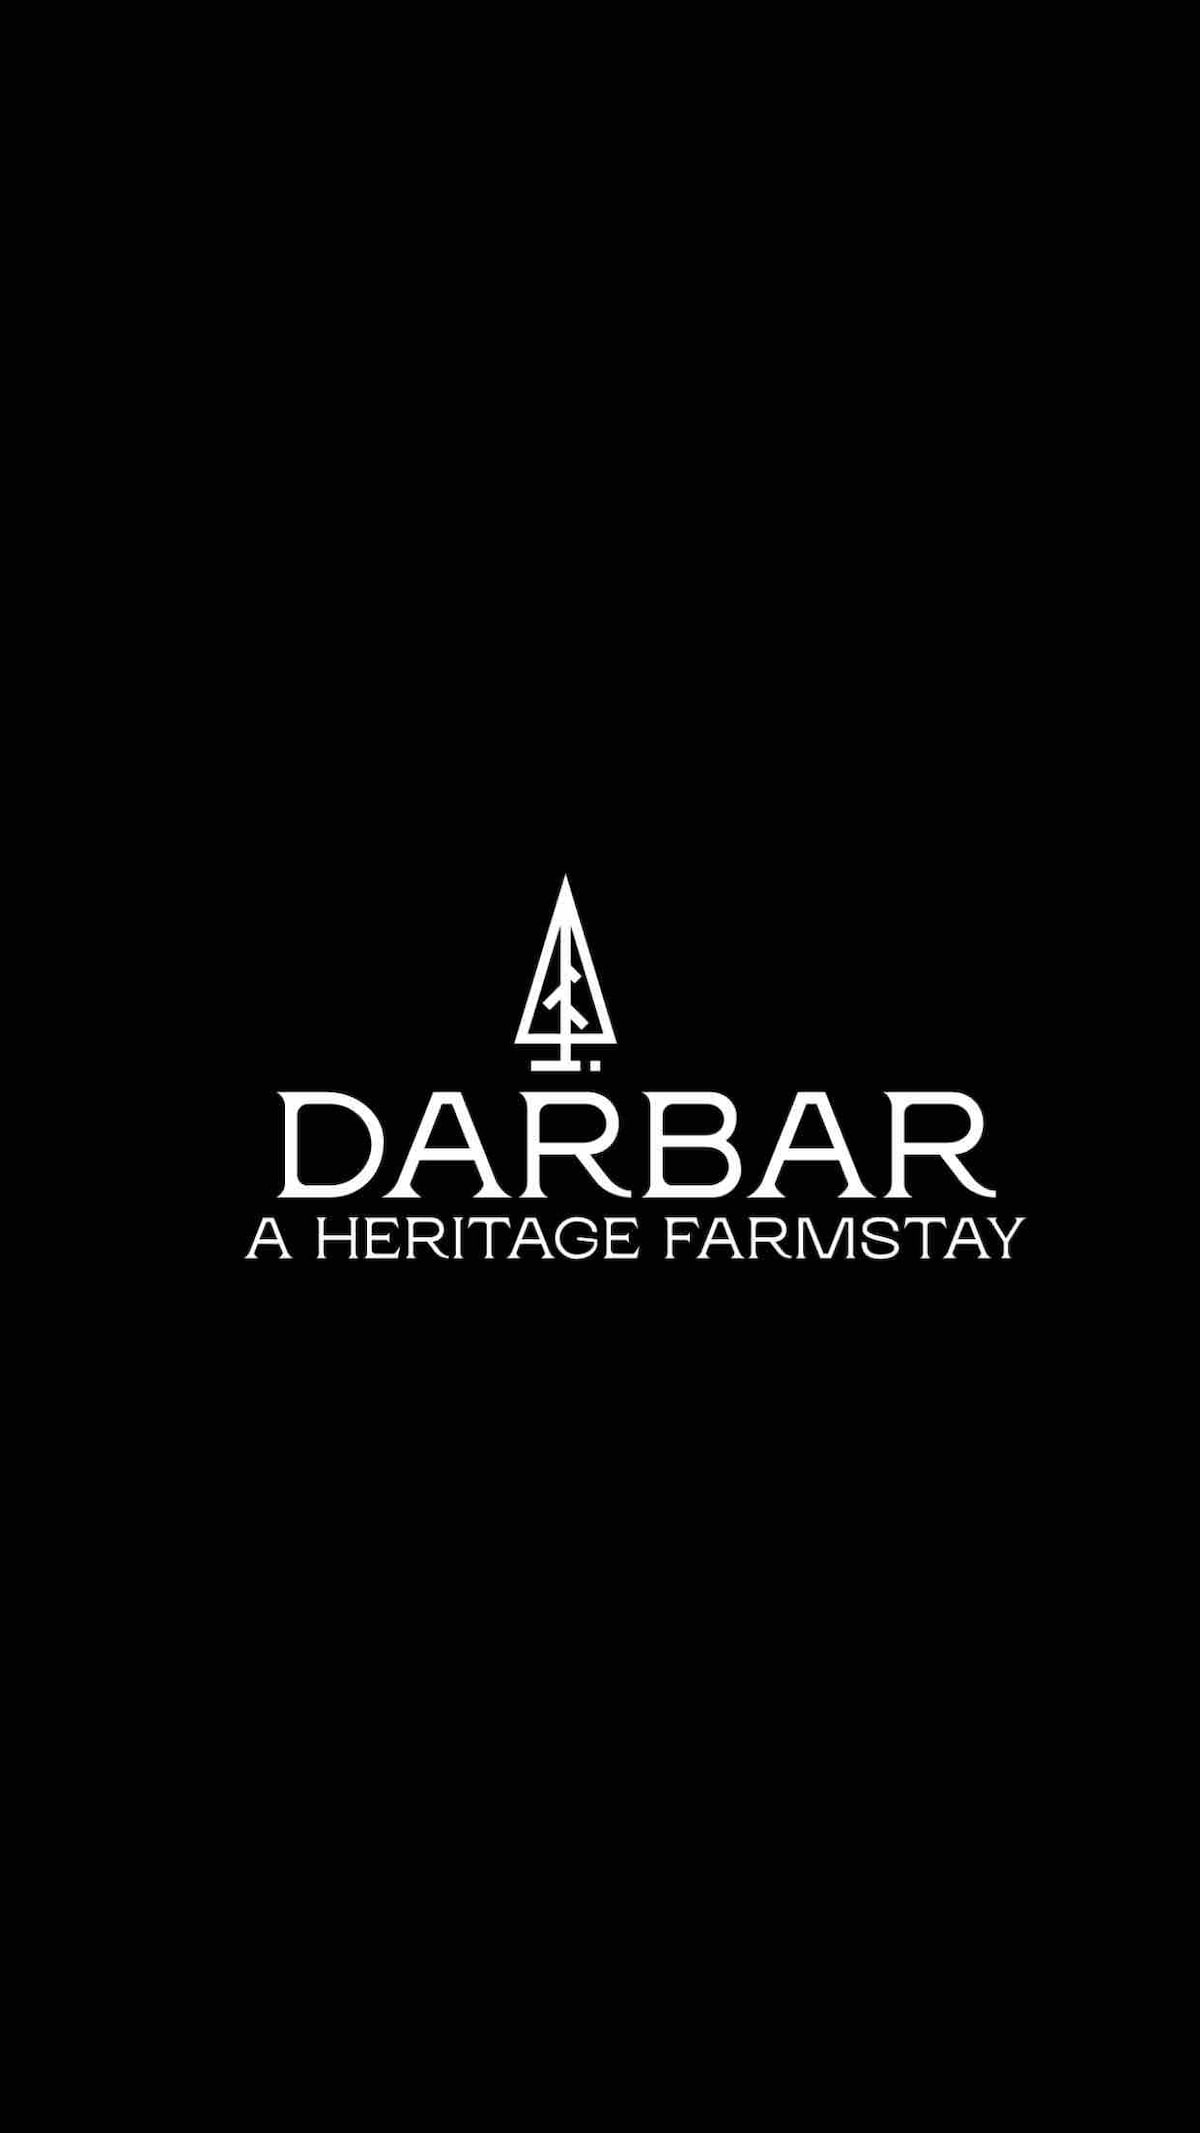 Darbar - A Heritage Farmstay